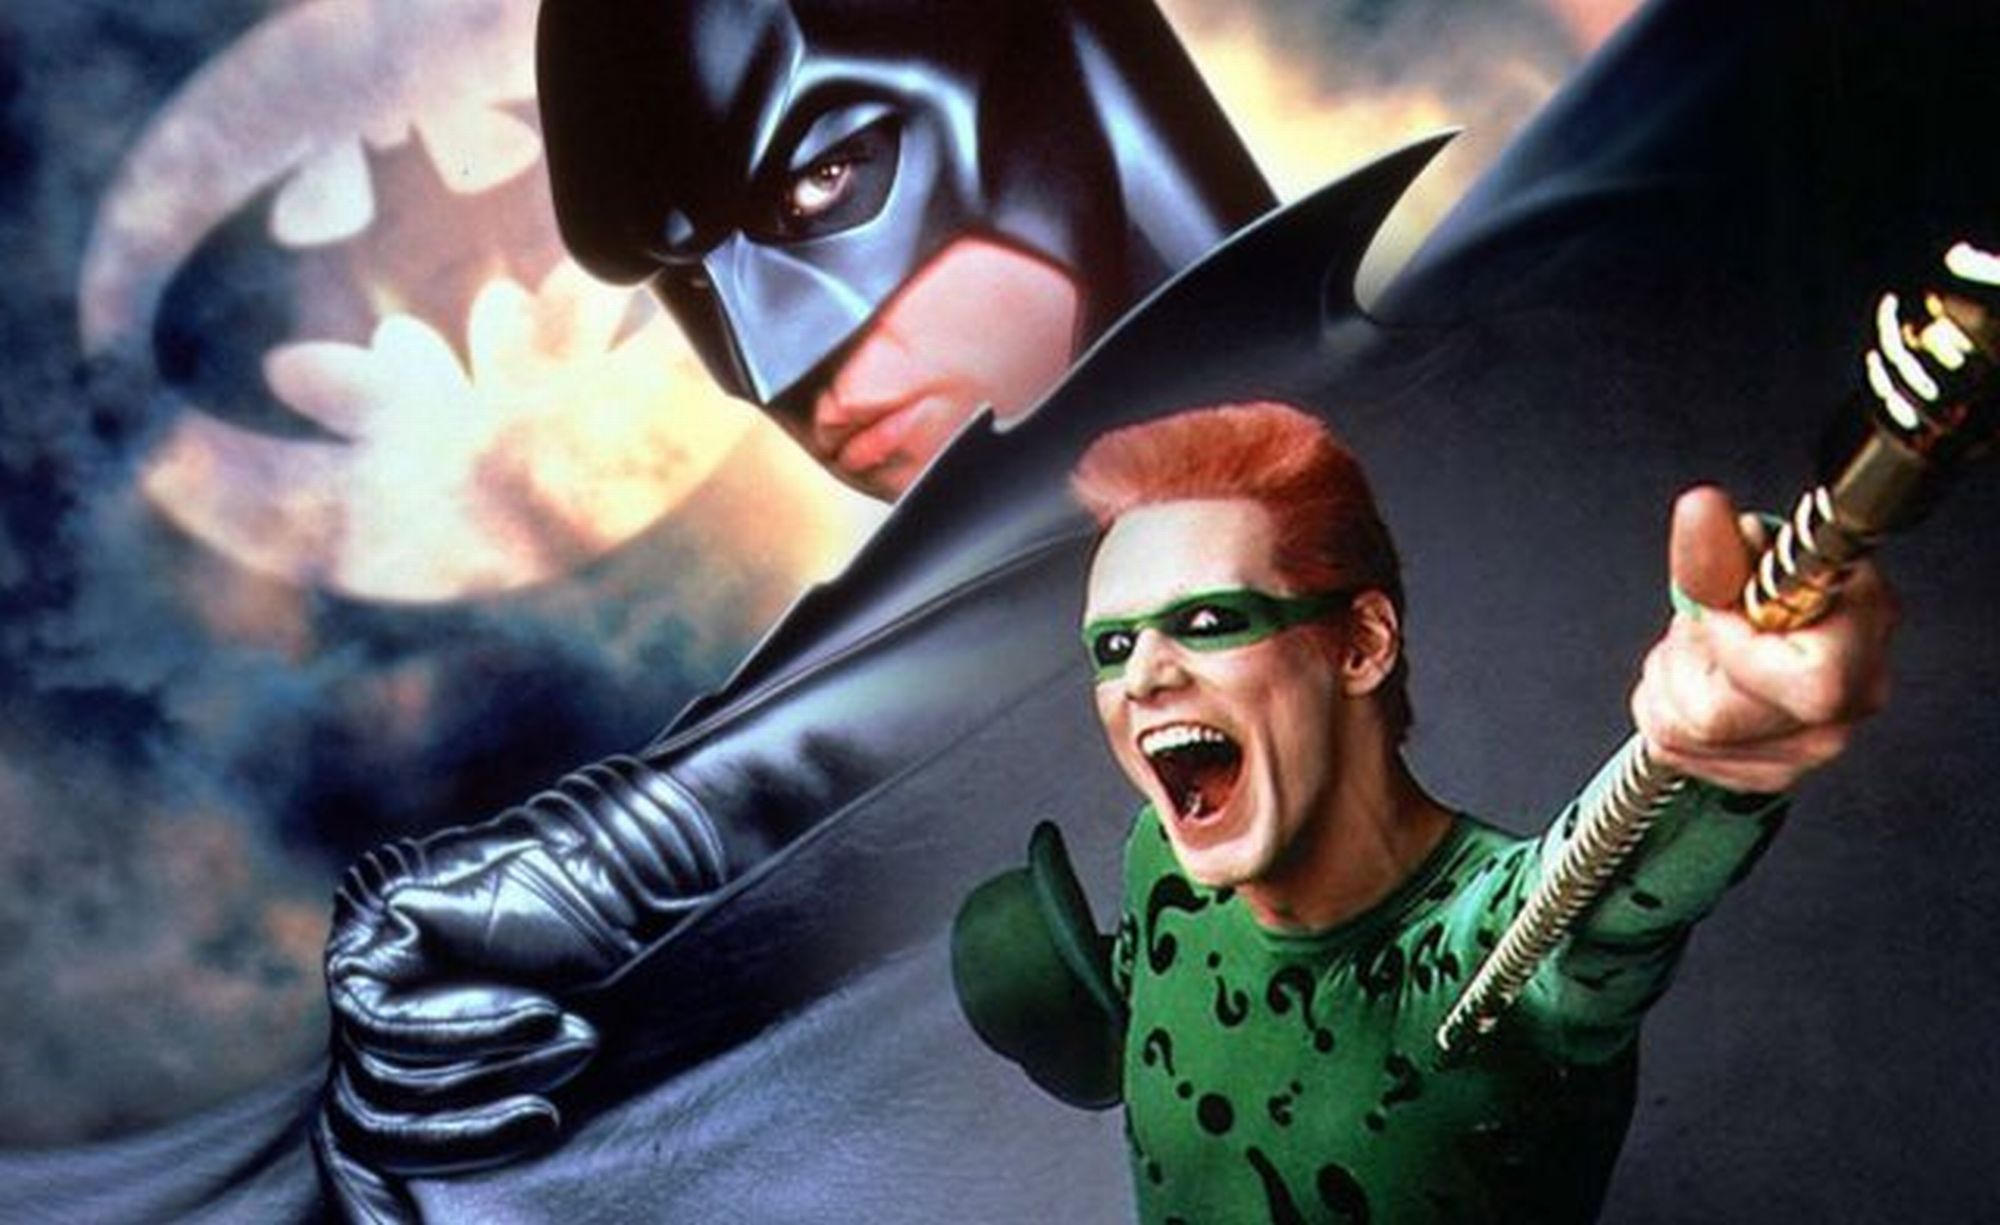 Batman 6. Бэтмен навсегда 1995. Джим Керри 1995. Загадочник Бэтмен Джим Керри.